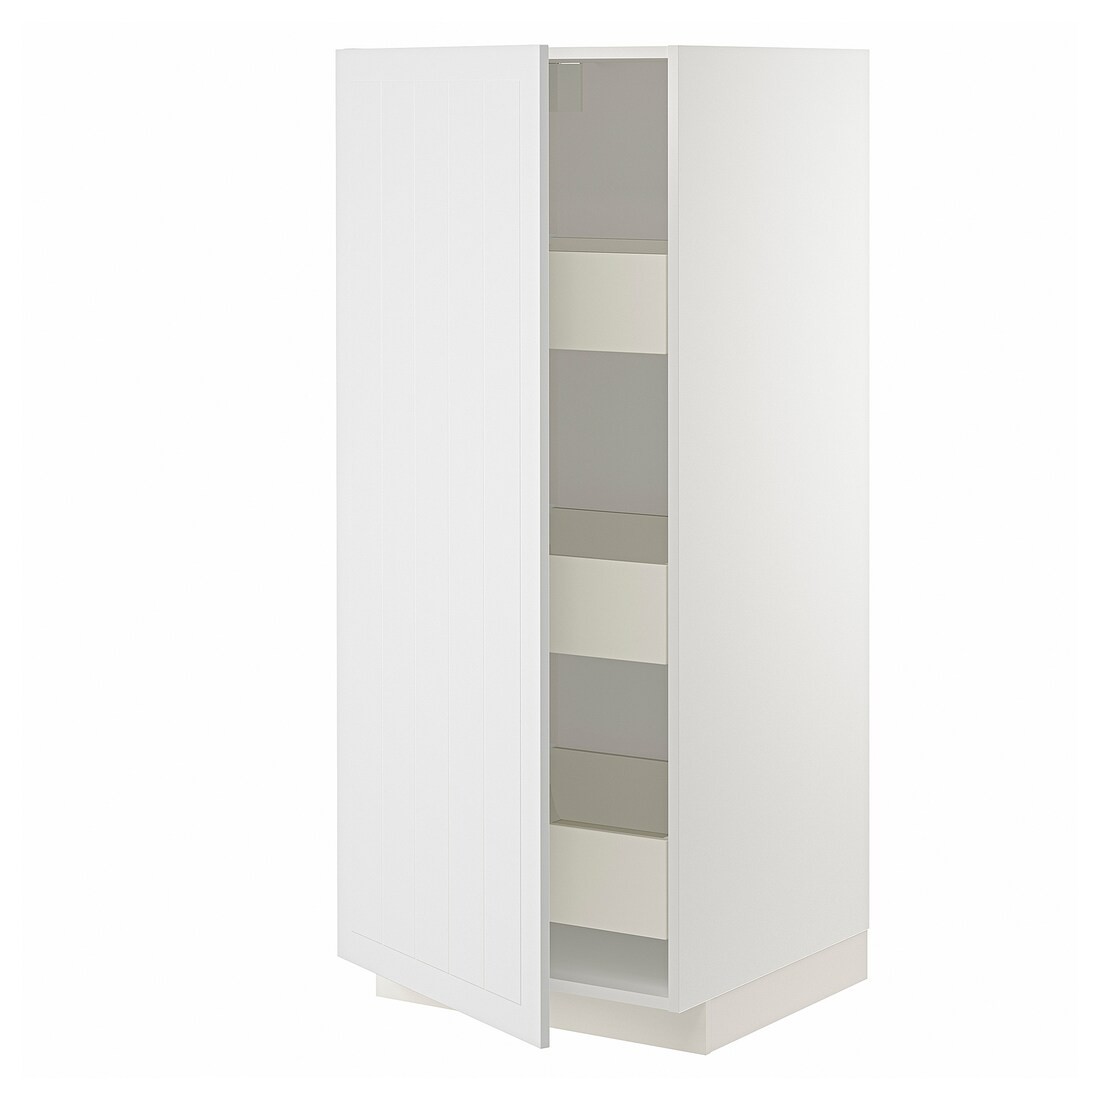 IKEA METOD МЕТОД / MAXIMERA МАКСИМЕРА Шкаф высокий с ящиками, белый / Stensund белый, 60x60x140 см 09409344 094.093.44